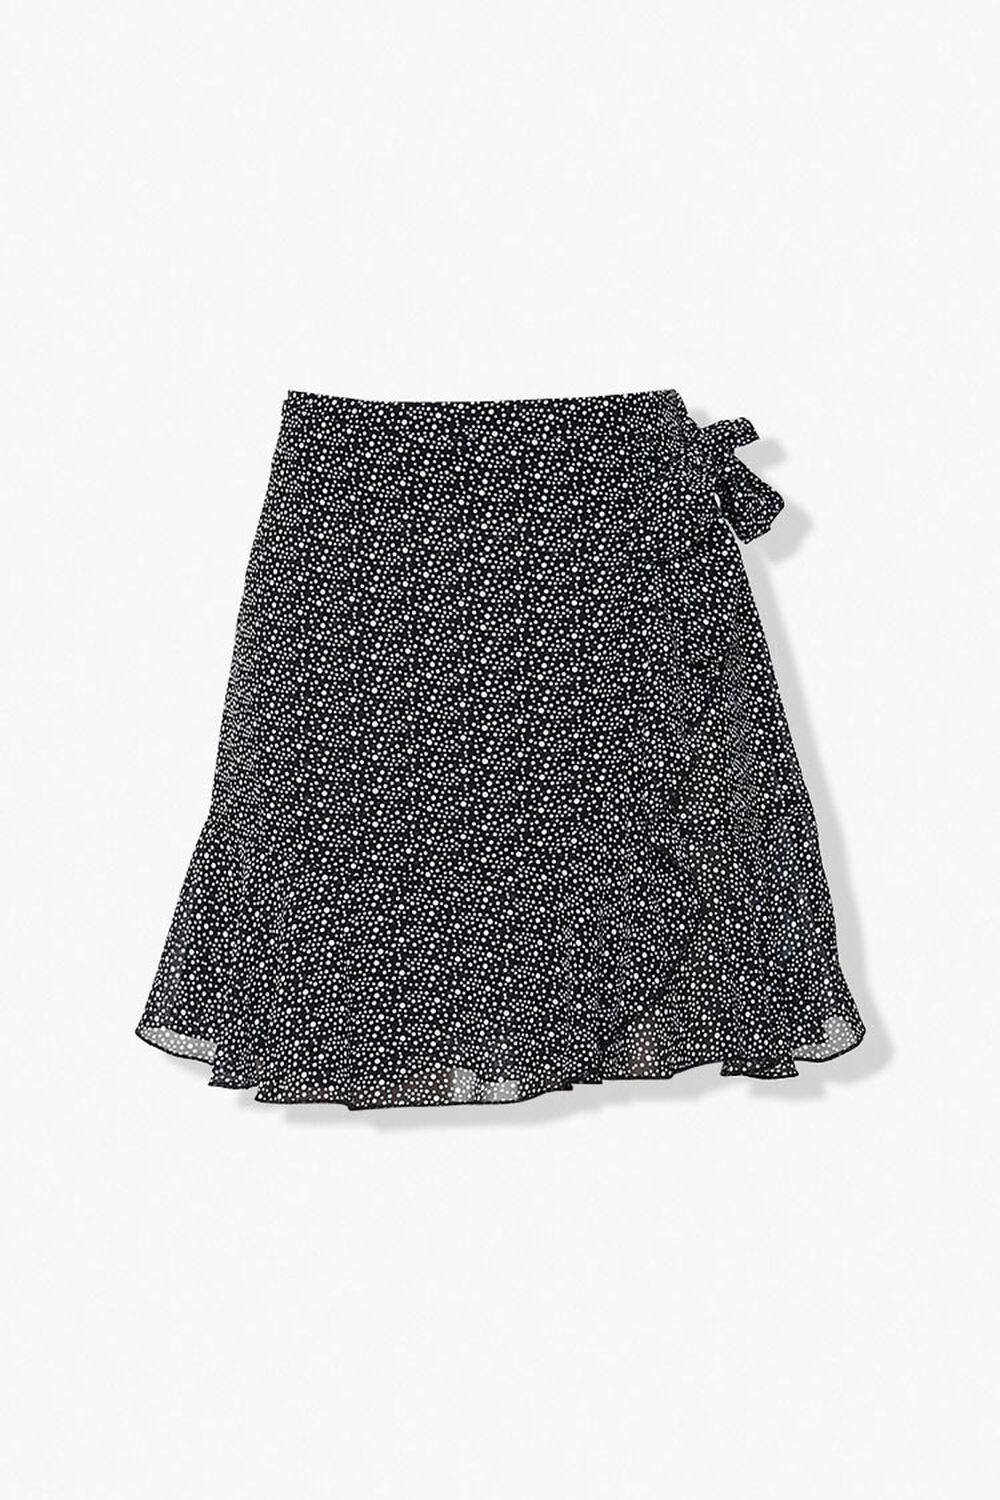 Dotted Ruffle-Trim Skirt